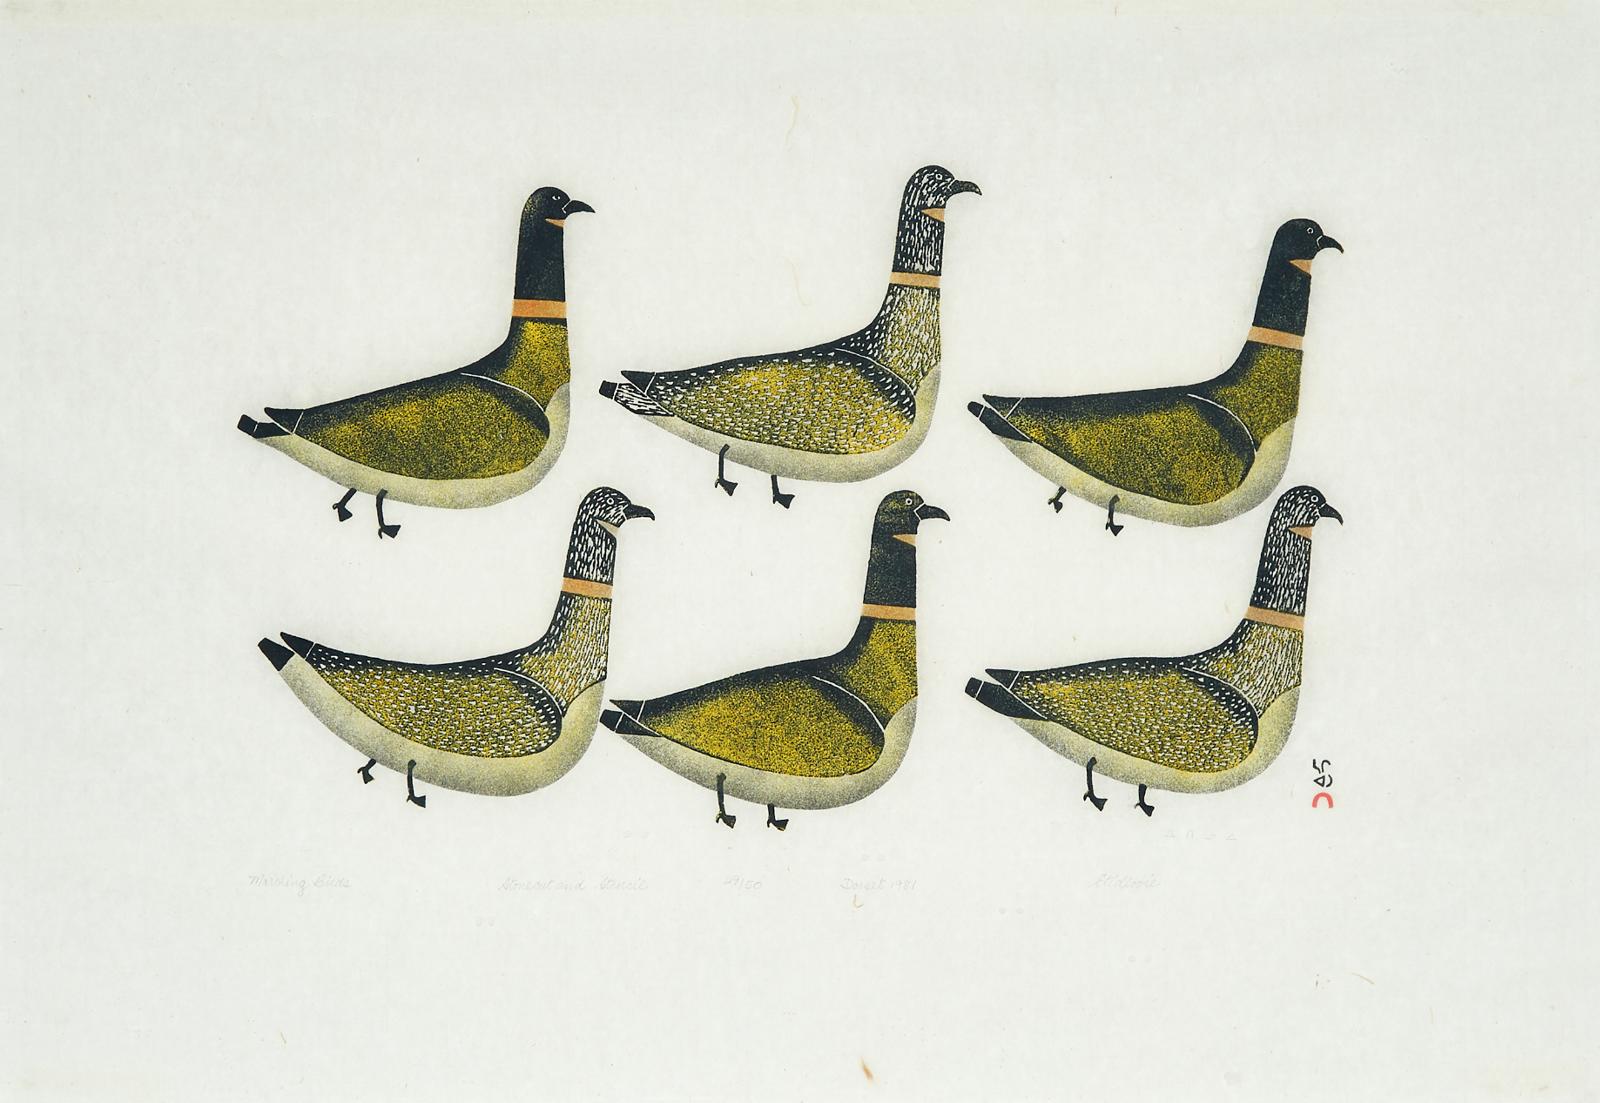 Kellypalik Etidlooie (1966) - Marching Birds